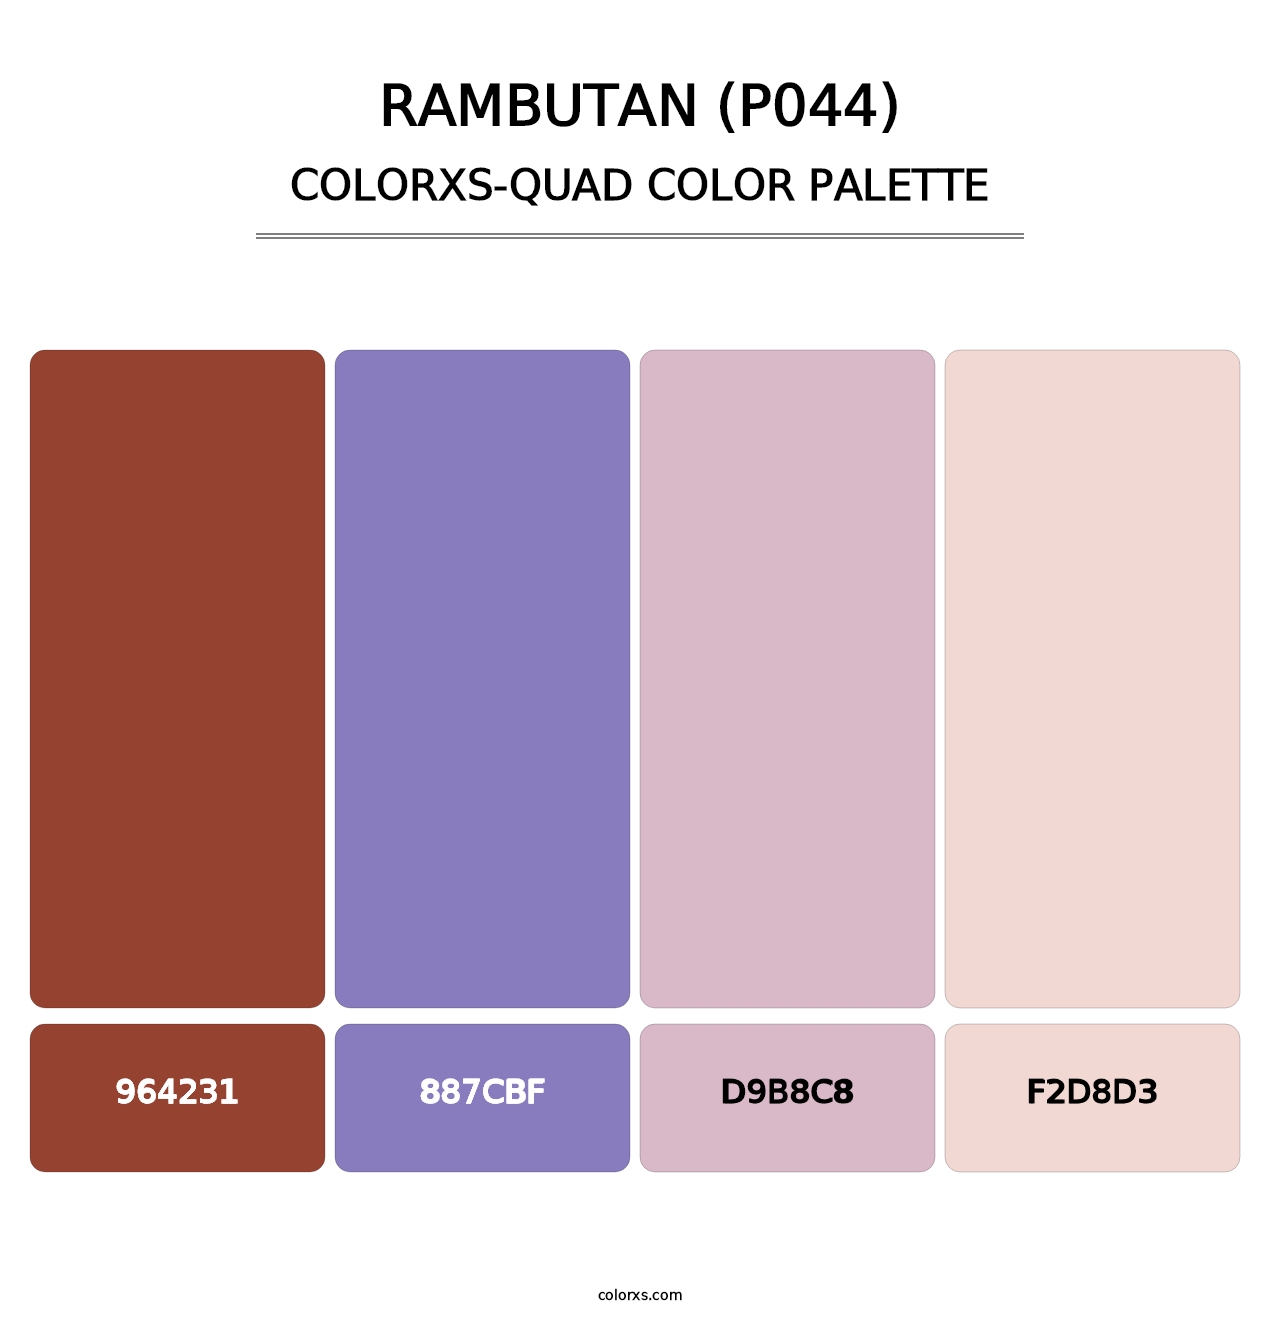 Rambutan (P044) - Colorxs Quad Palette